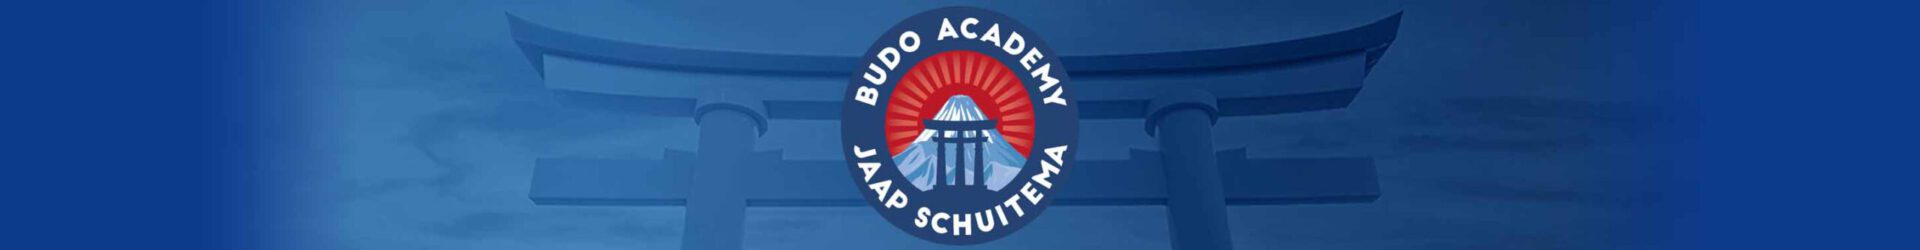 Budo Academy Jaap Schuitema